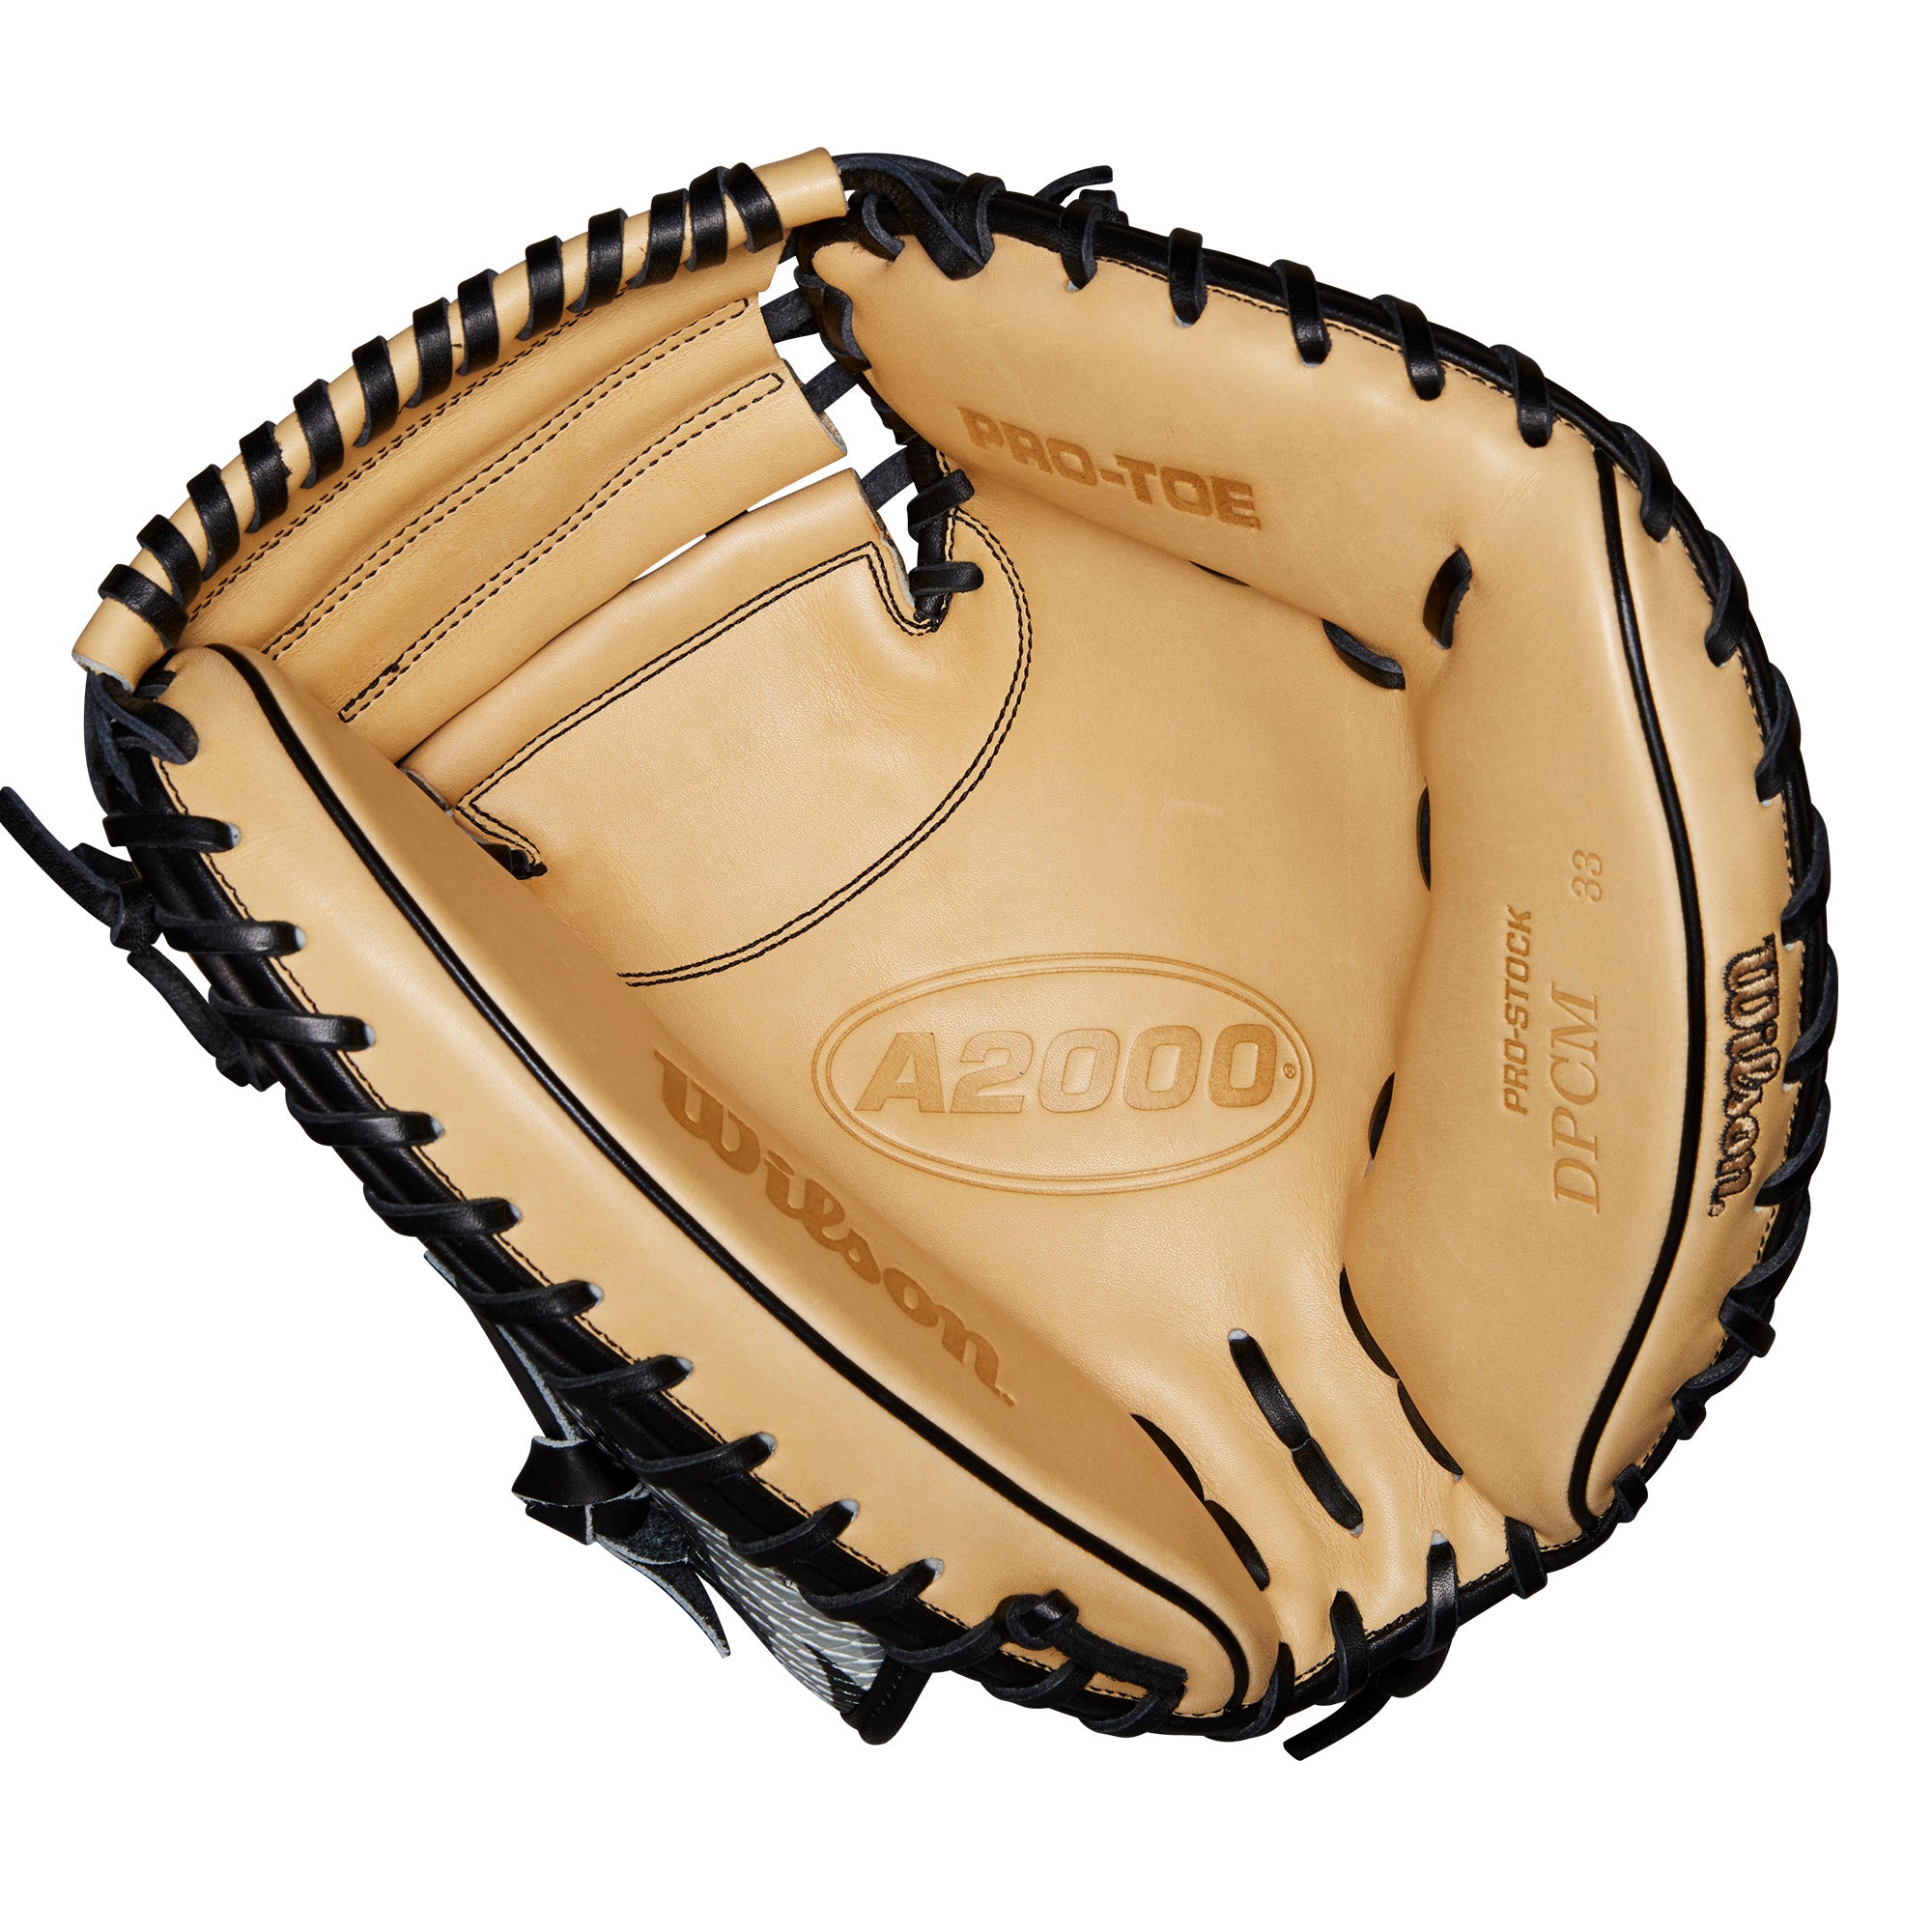 Wilson A9880 Pro-Toe Grip-Tite Pocket 12 Softball Catcher's Mitt Glove RHT